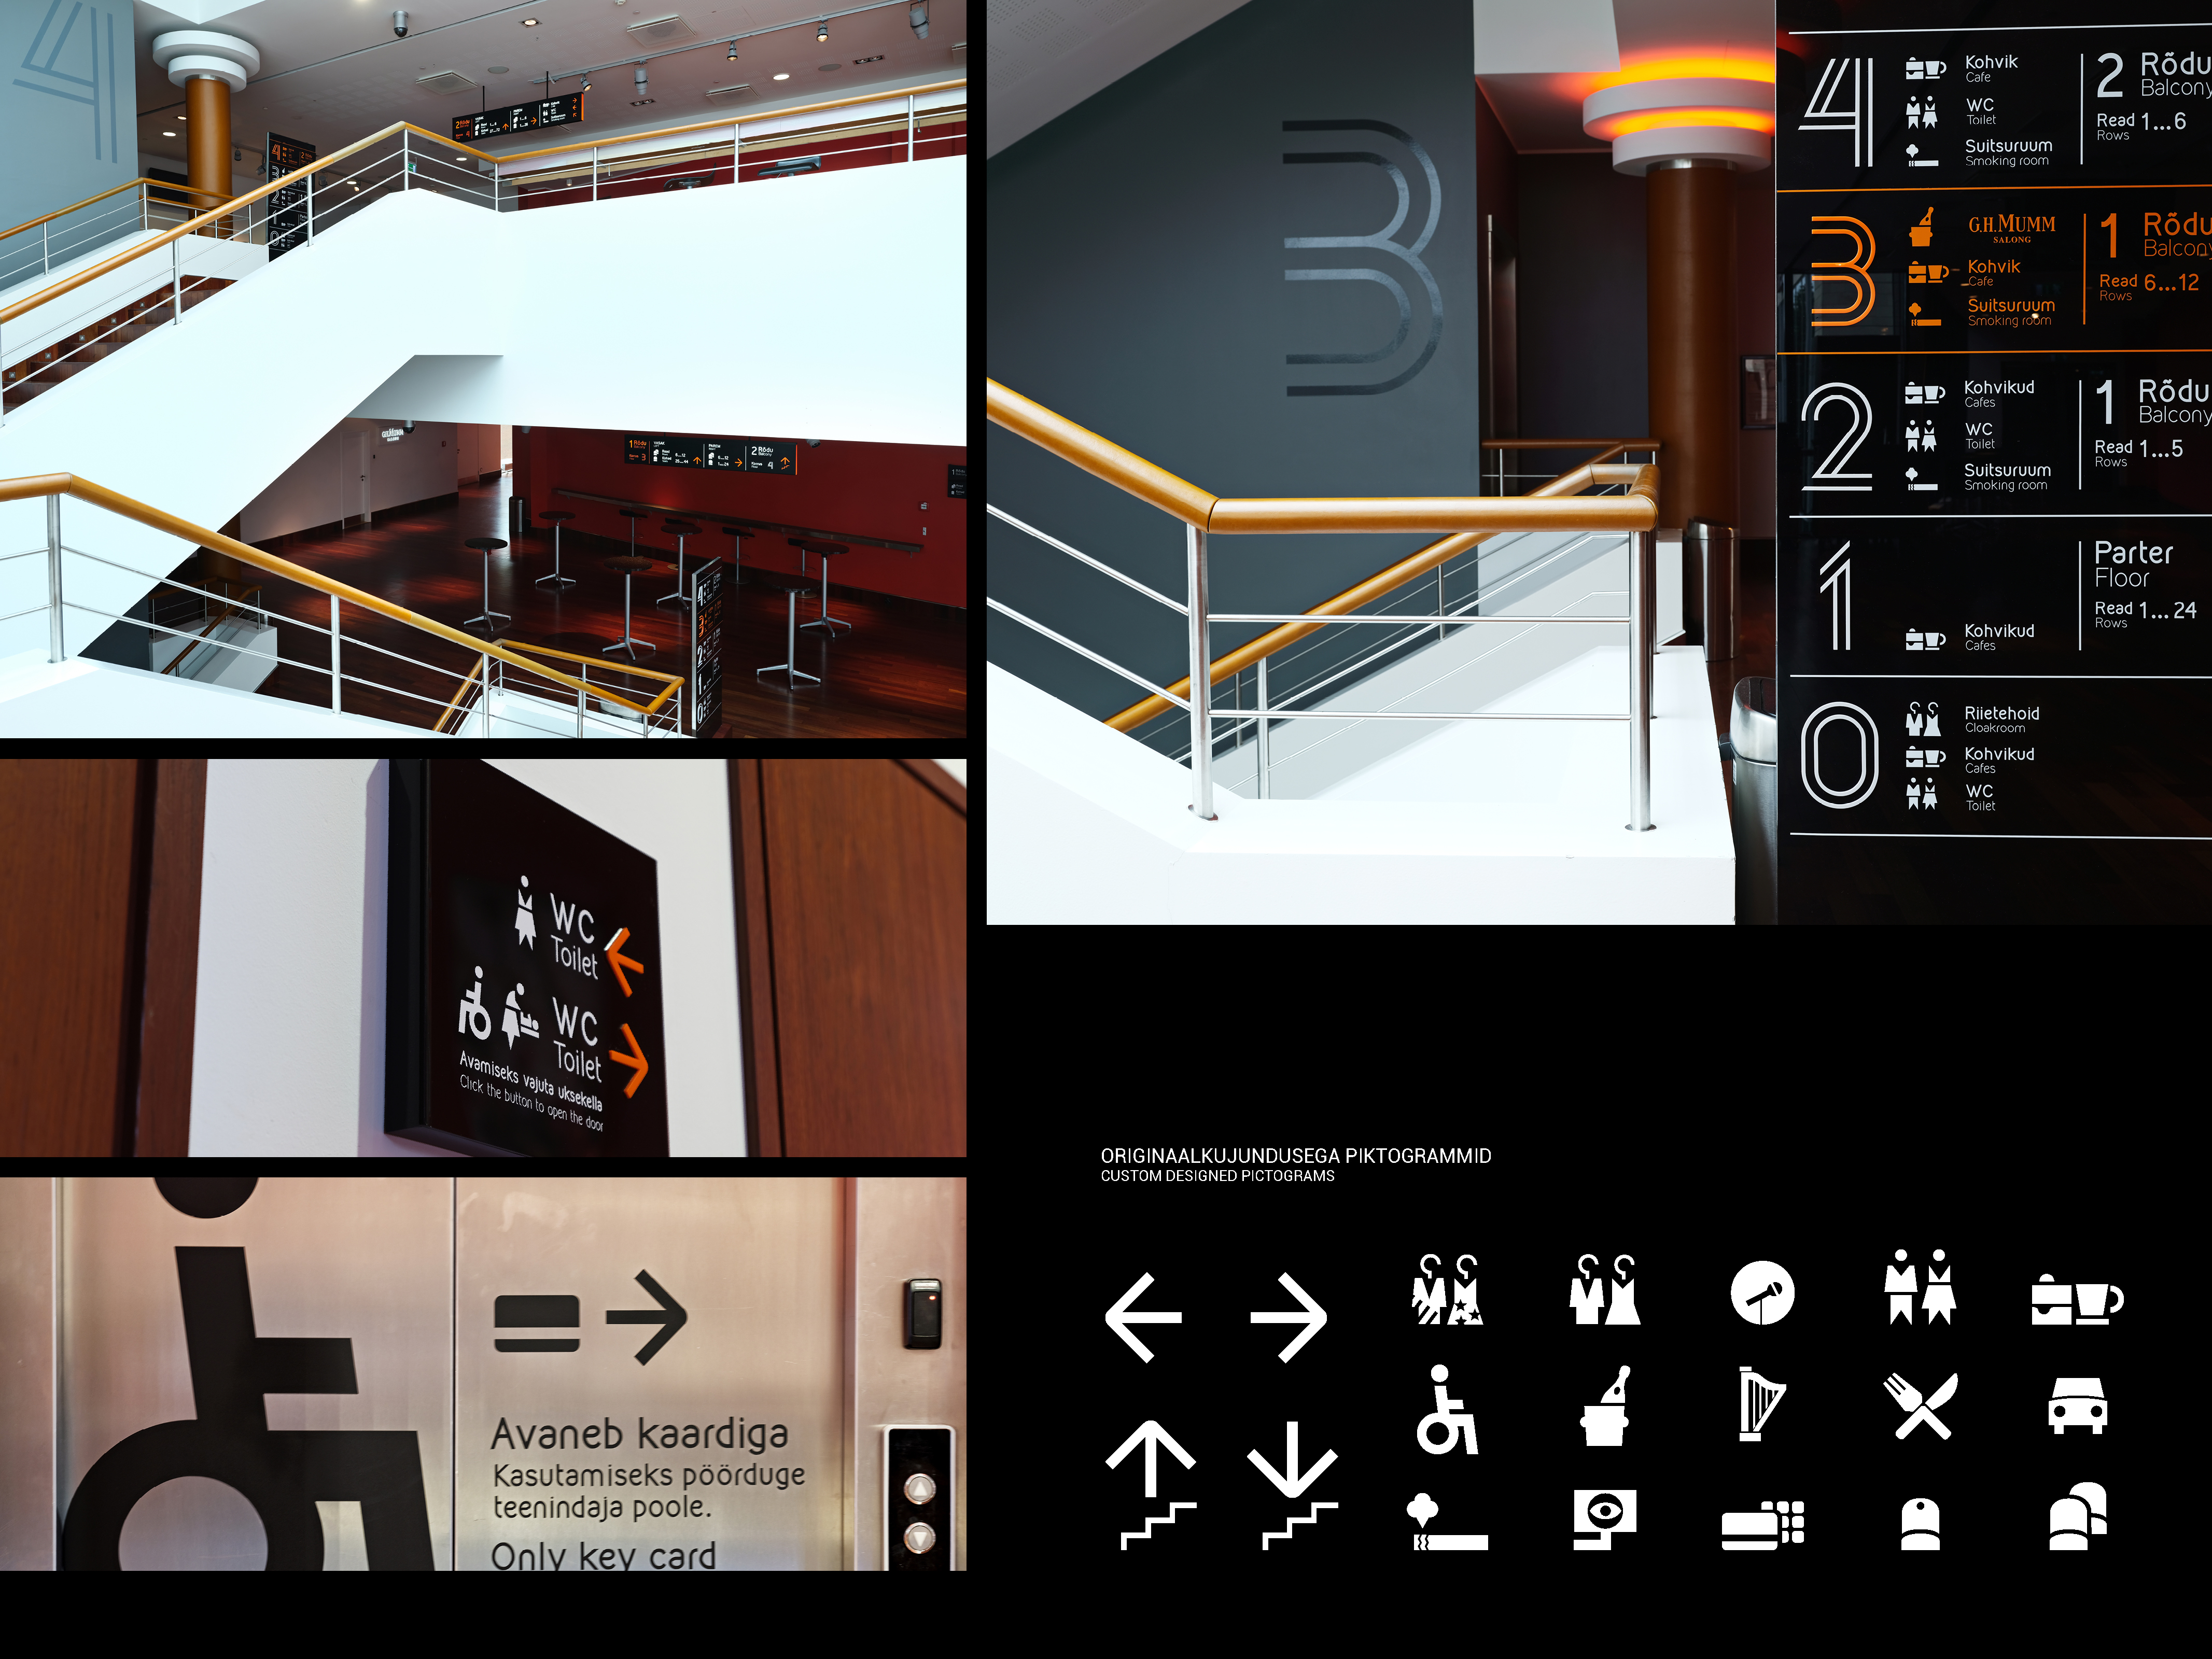 Nordea音乐厅标识系统设计©angels